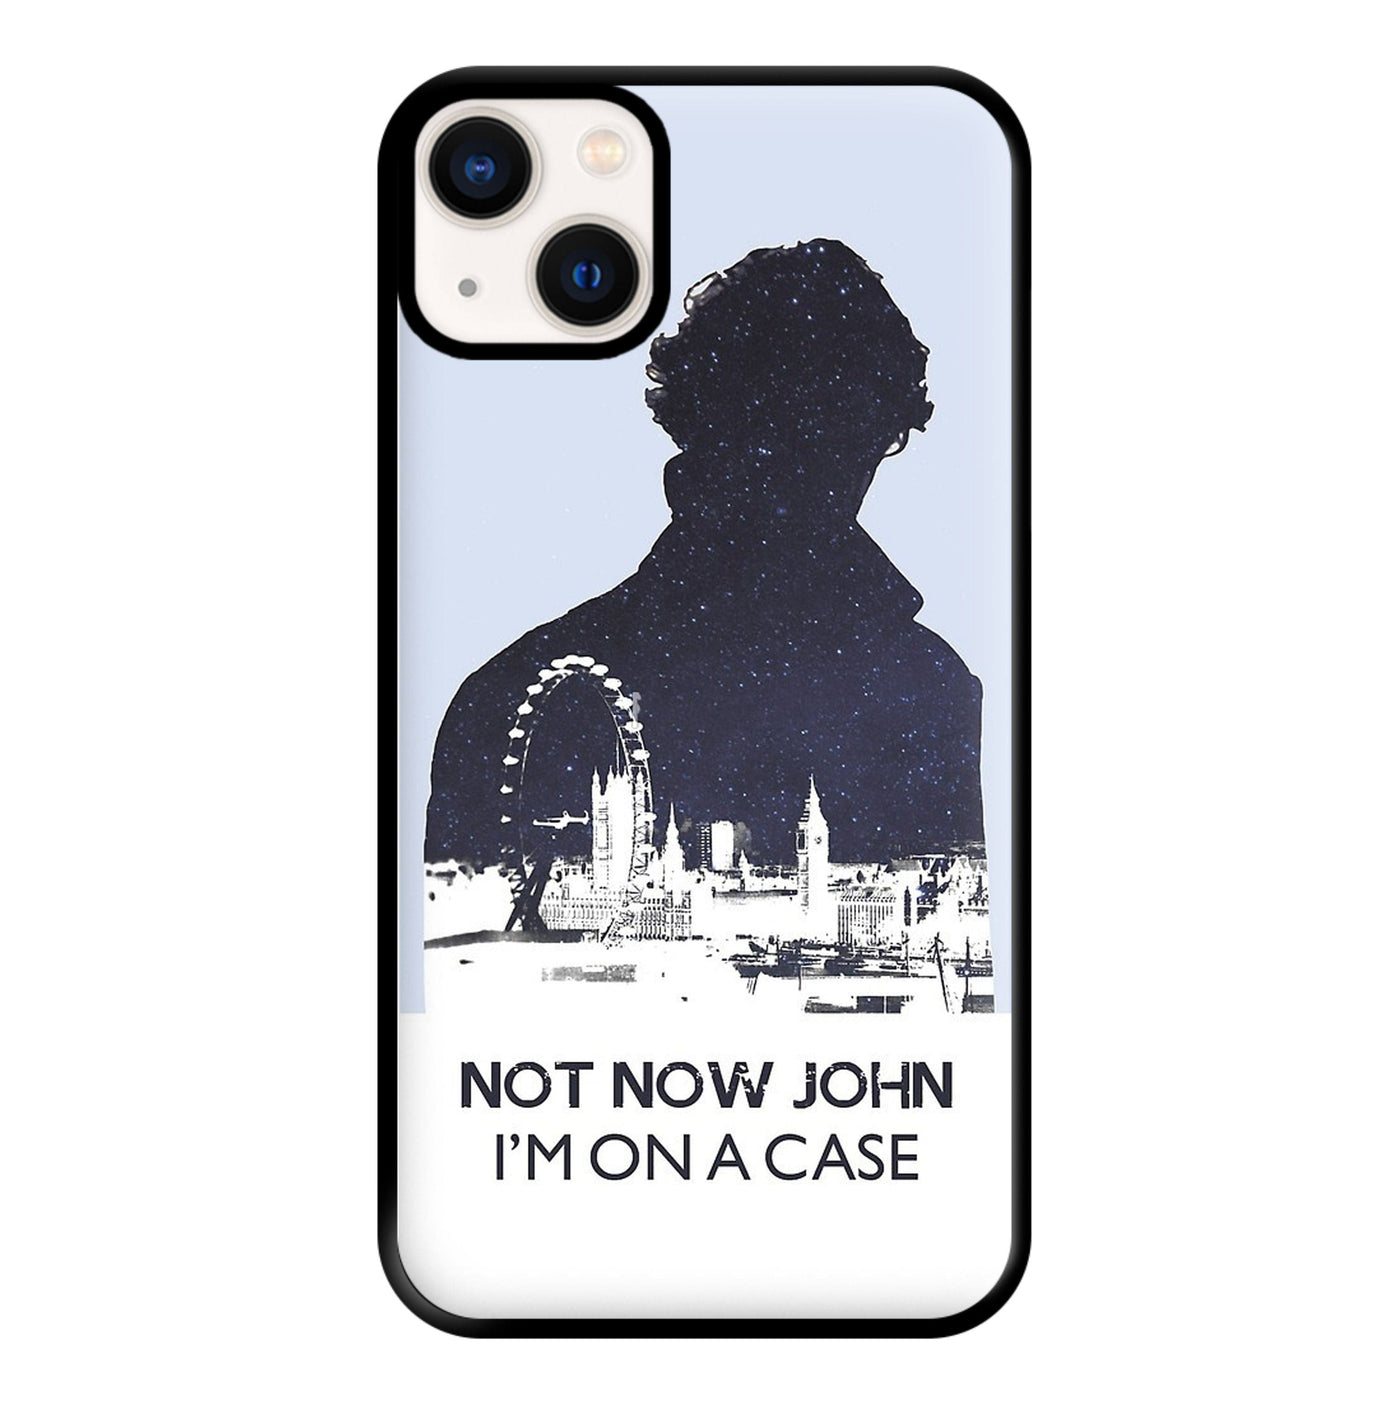 Now Now John, I'm On A Case - Sherlock Phone Case